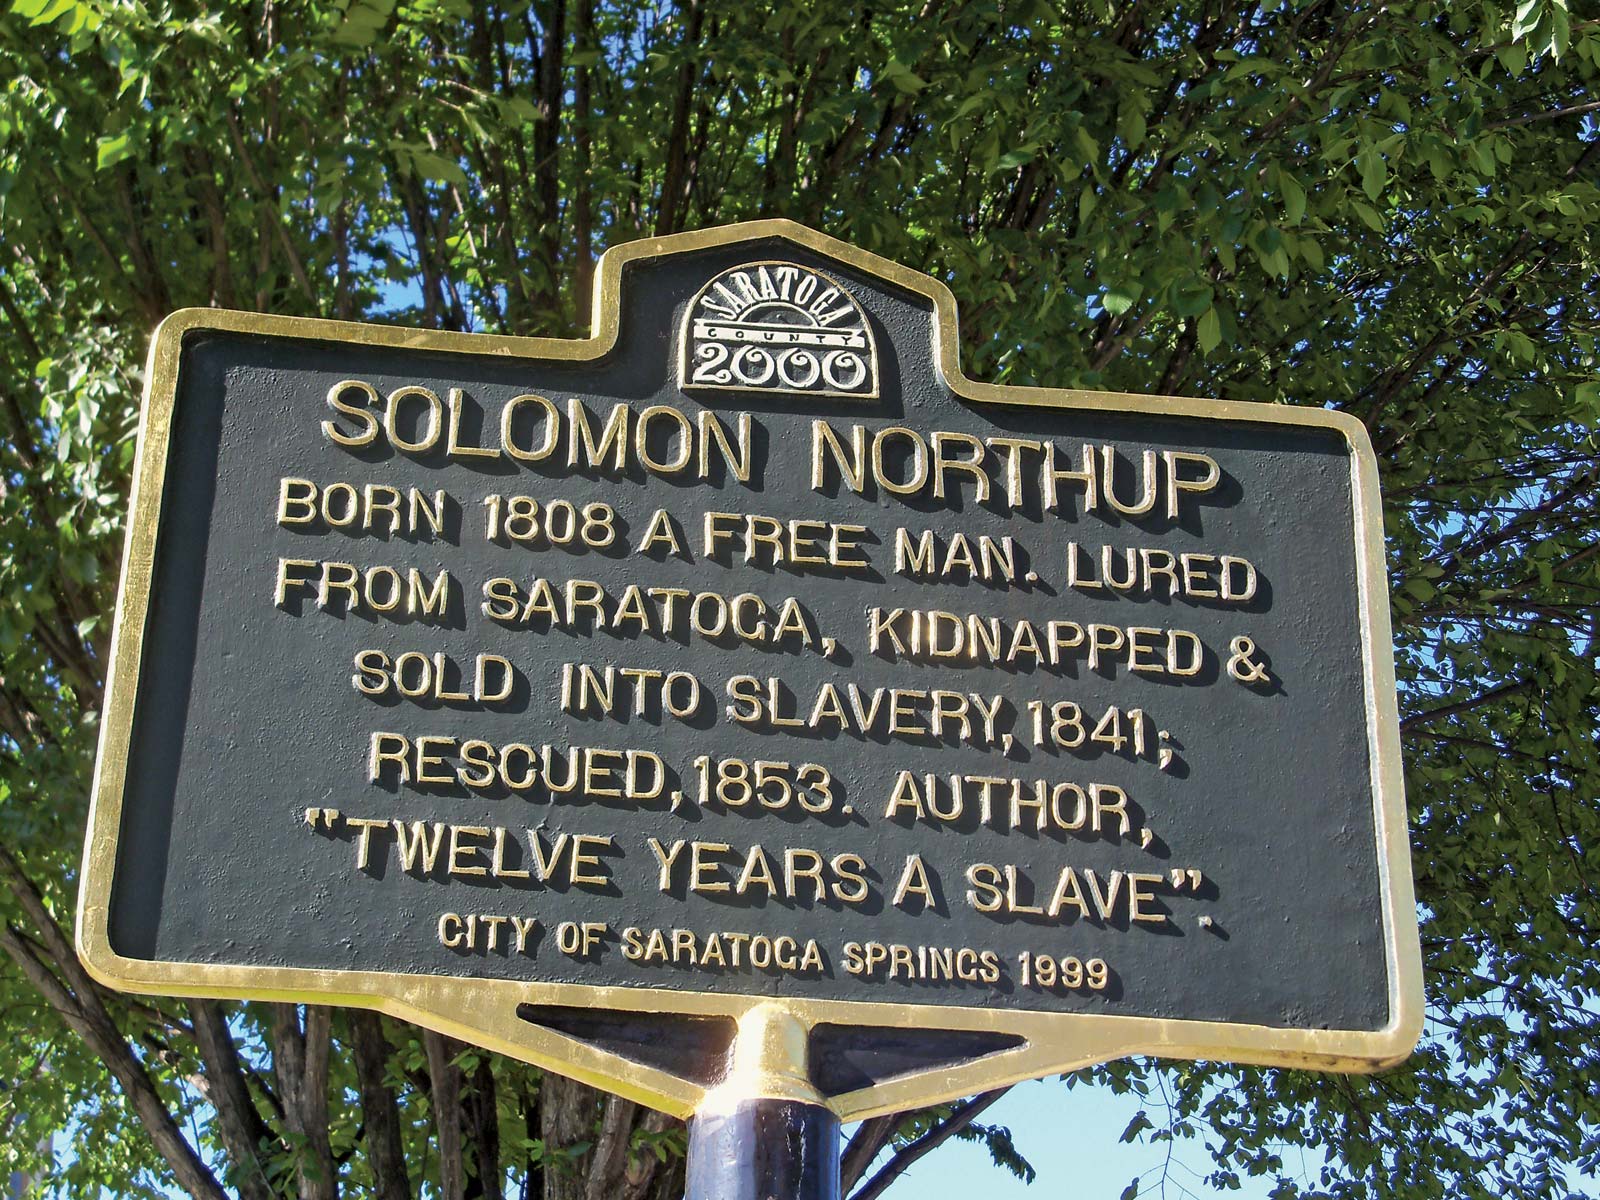 Salomon Northup